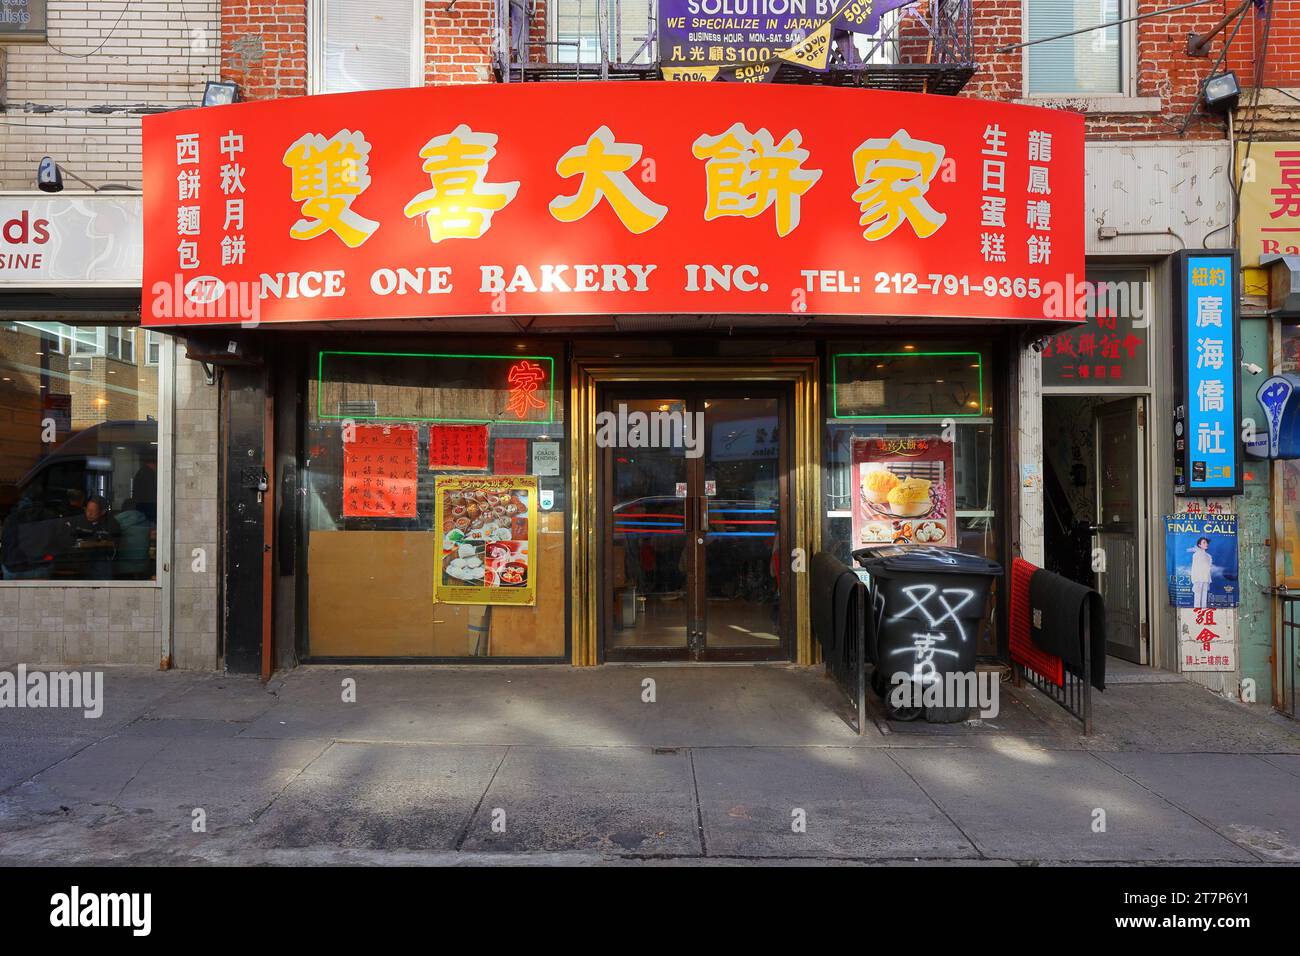 Nice One Bakery 雙喜大餅家, 47 Bayard St, New York, NYC storefront photo of a Chinese bakery in Manhattan Chinatown. Stock Photo